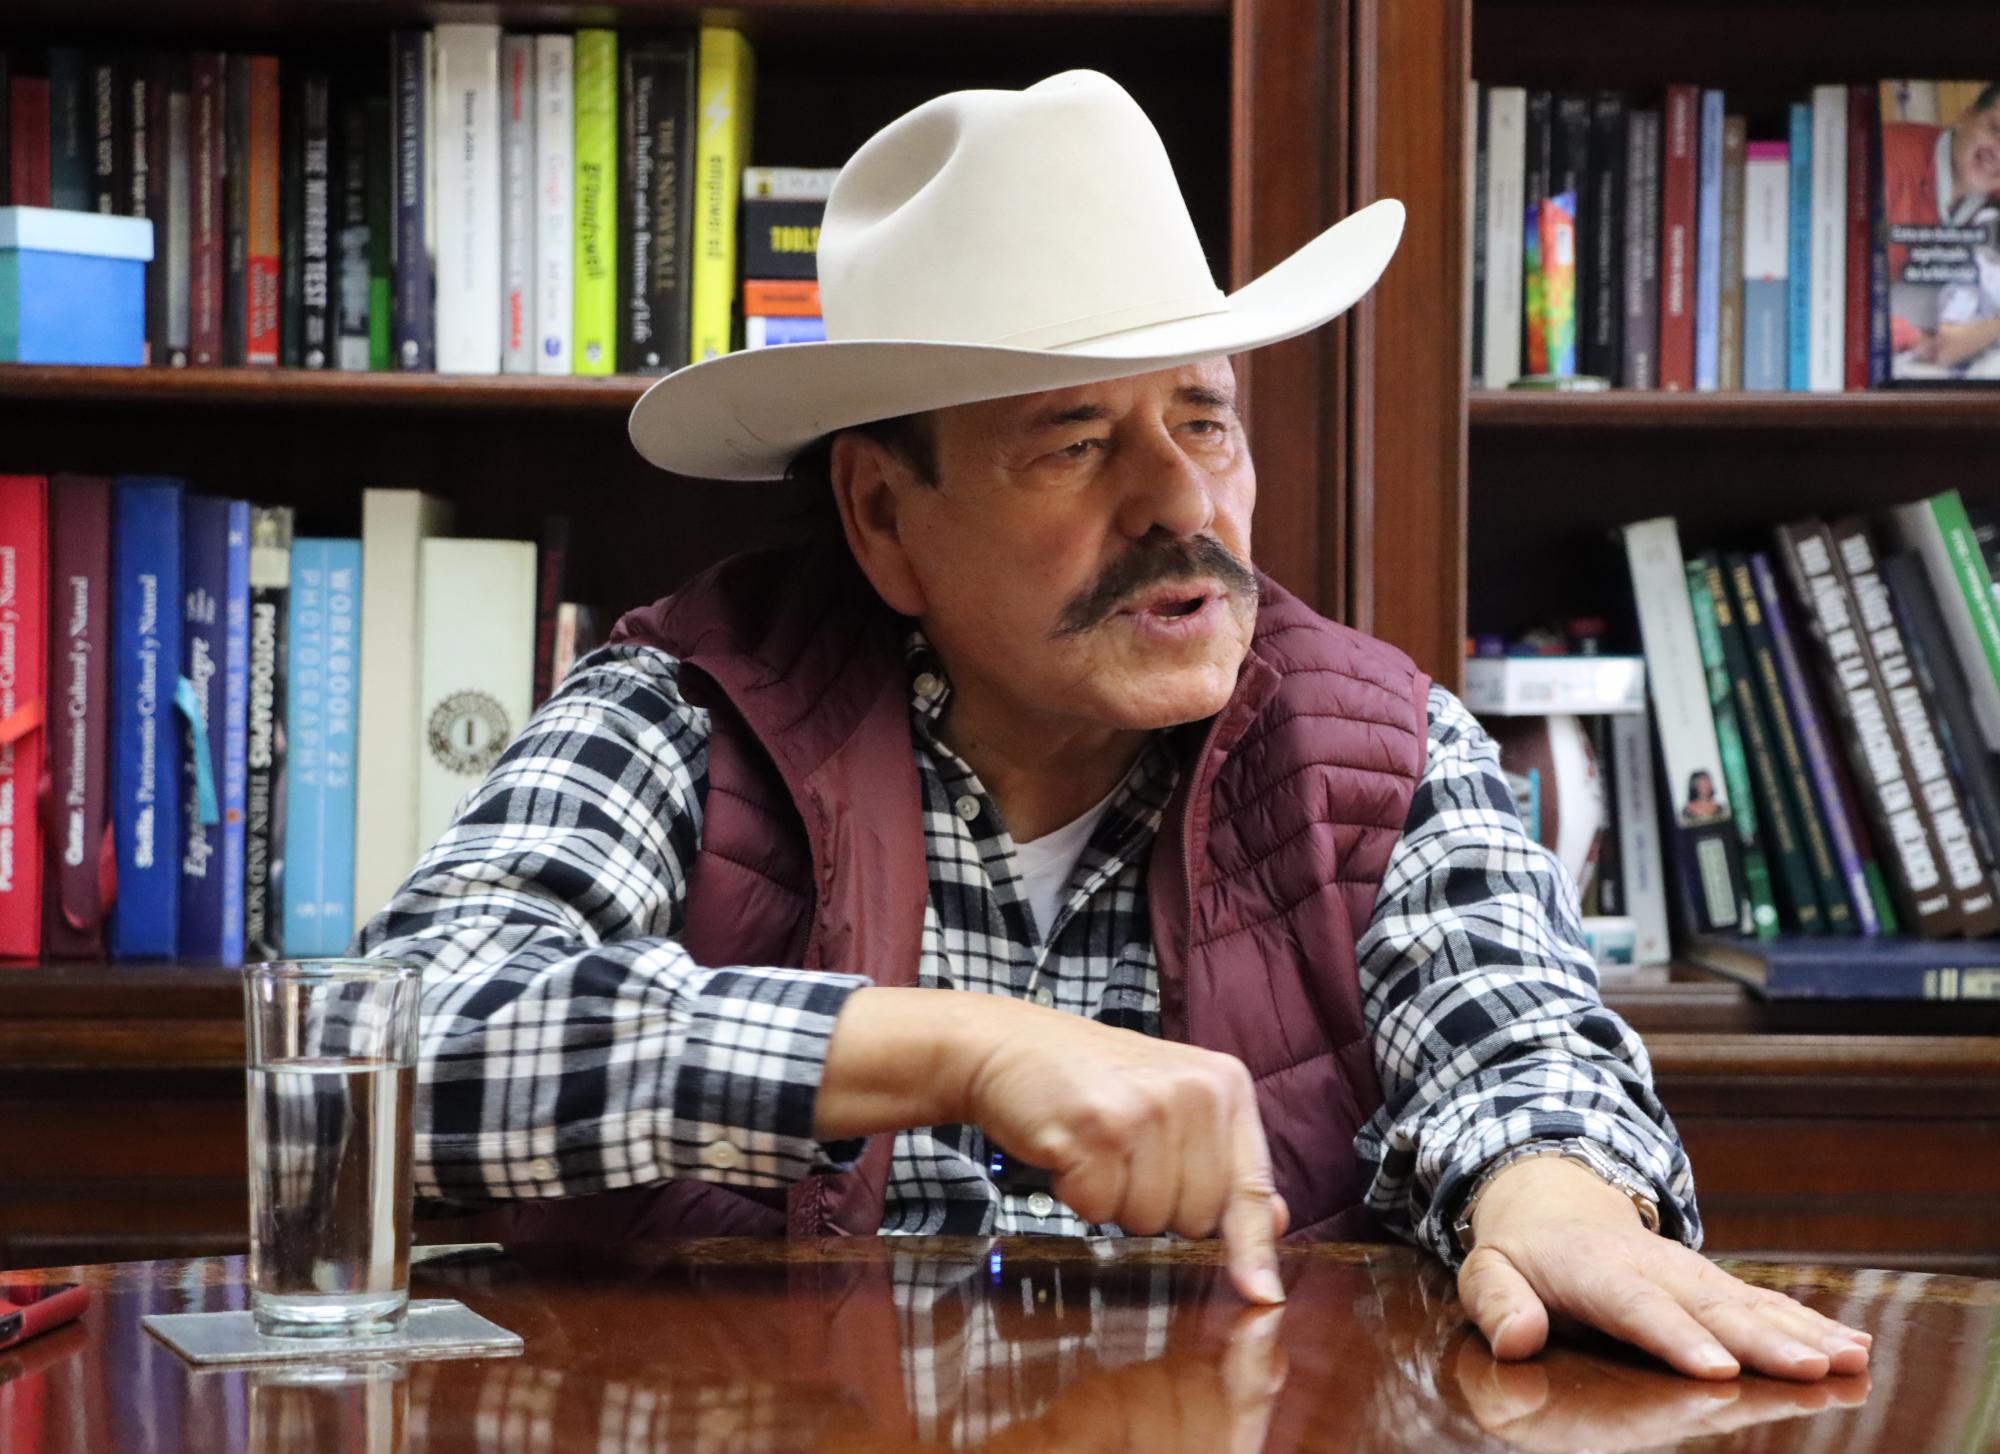 $!Candidatos Coahuila: ¿Qué obra o colección de arte traería a Coahuila?